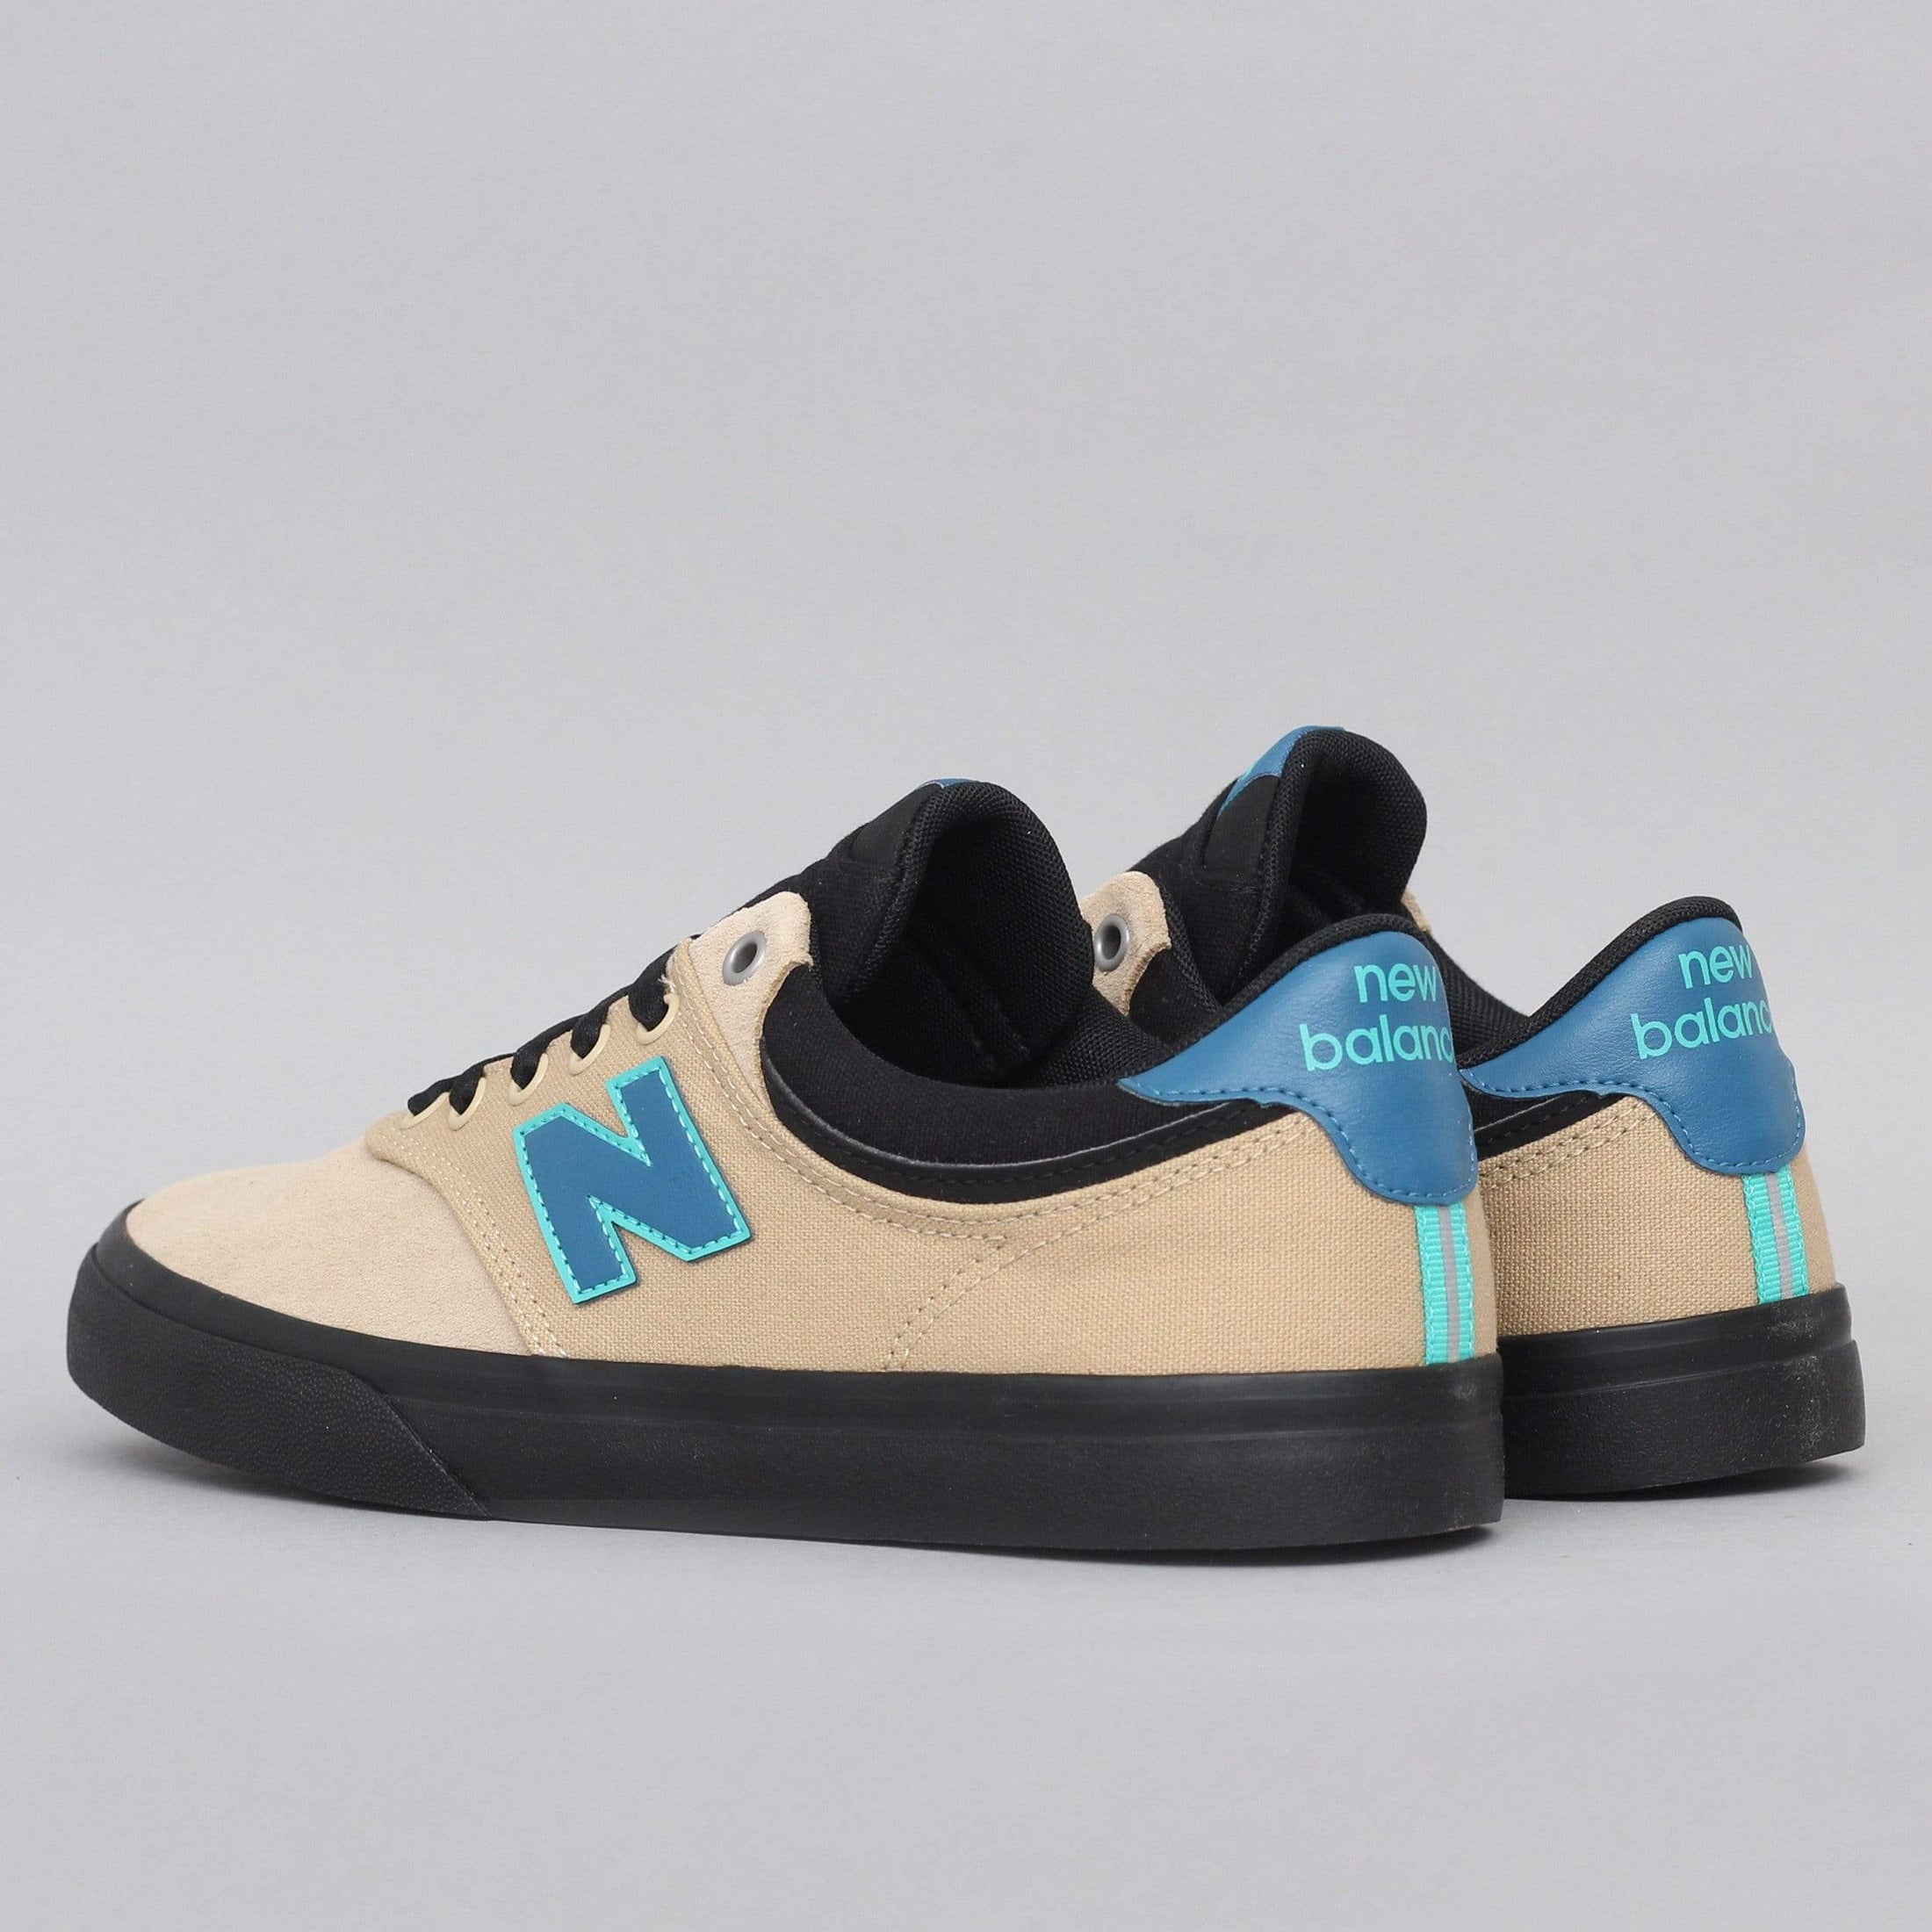 New Balance 255 Shoes Tan / Blue